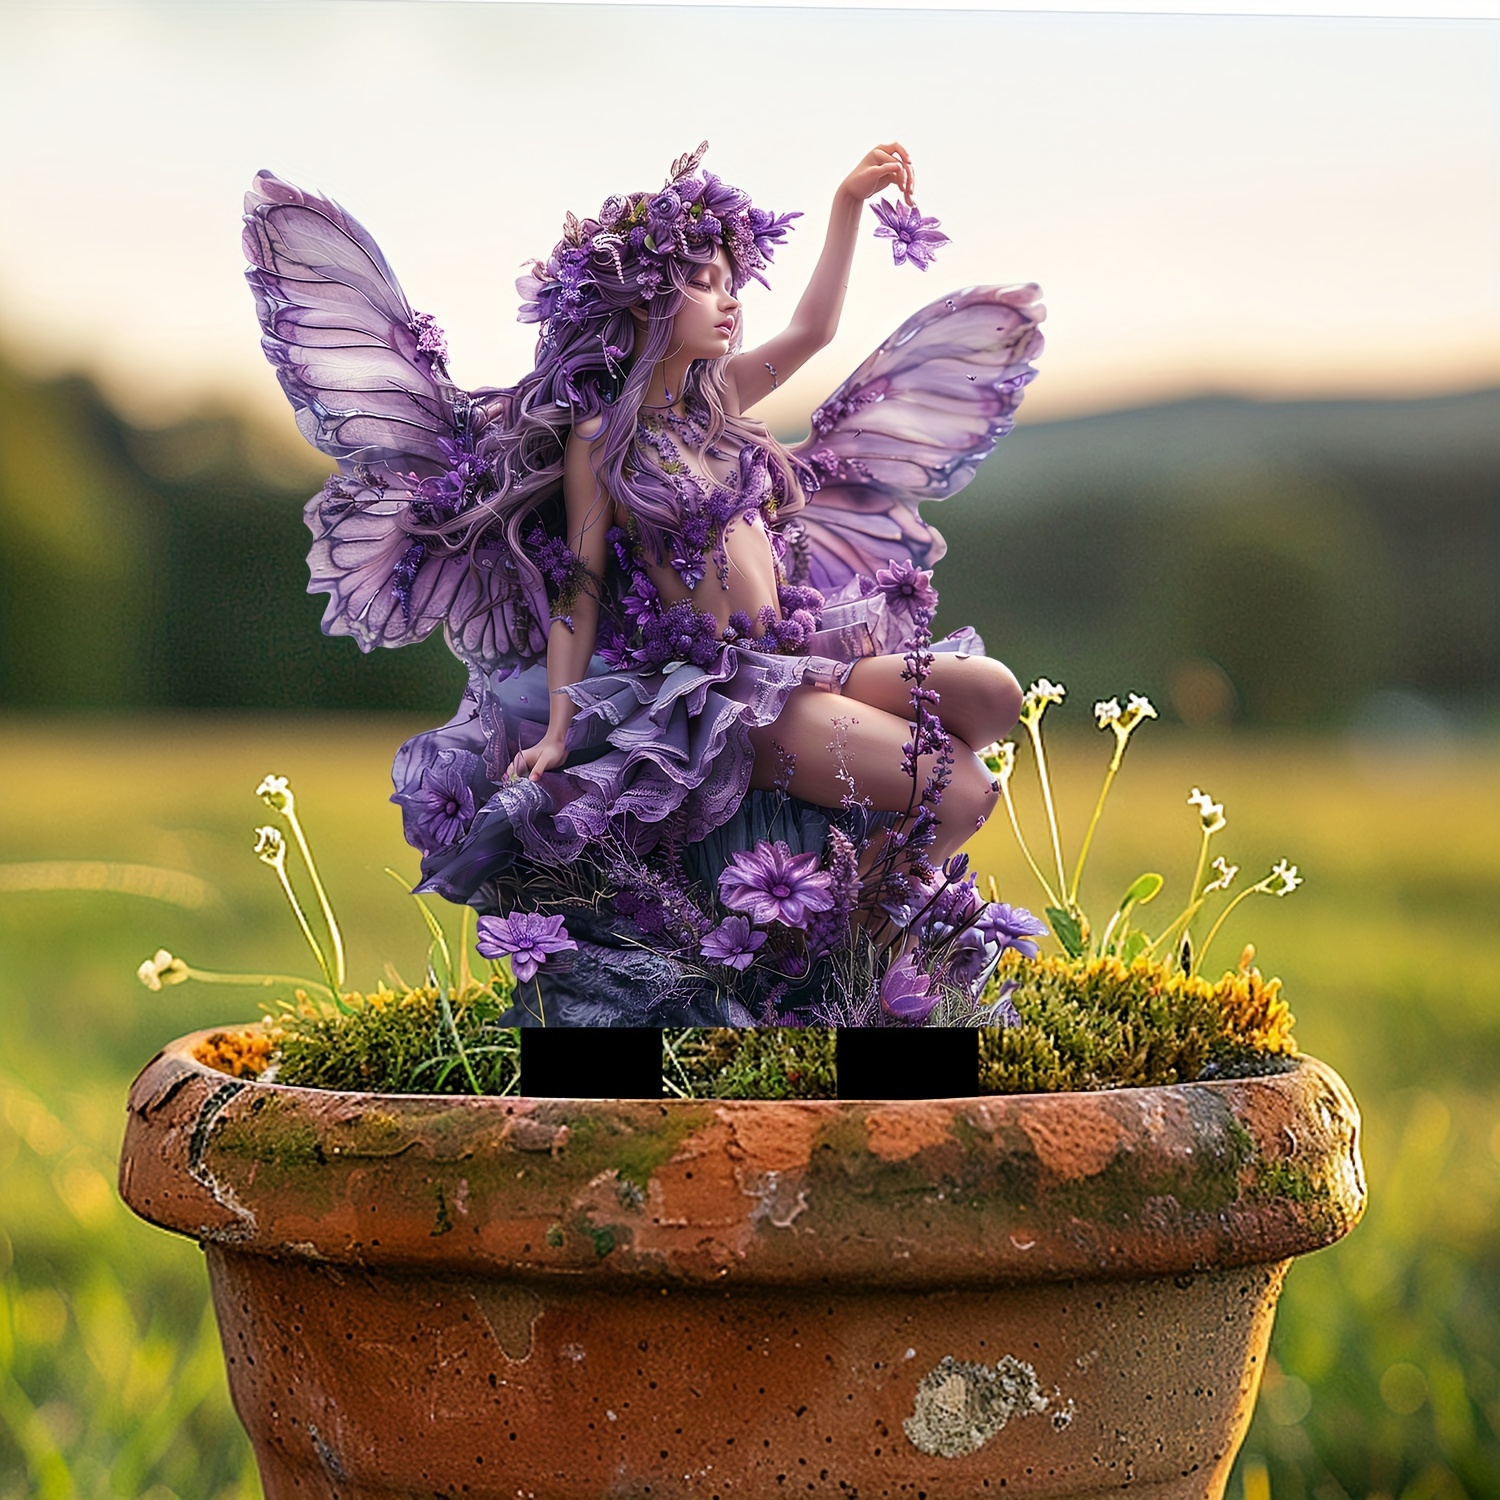 

Enchanting Purple Fairy Garden Stake - Acrylic Art Decor For Potted Plants, 11.8" X 7.8" - Bohemian Style Sun Catcher & Yard Accent Garden Decorations Garden Decor